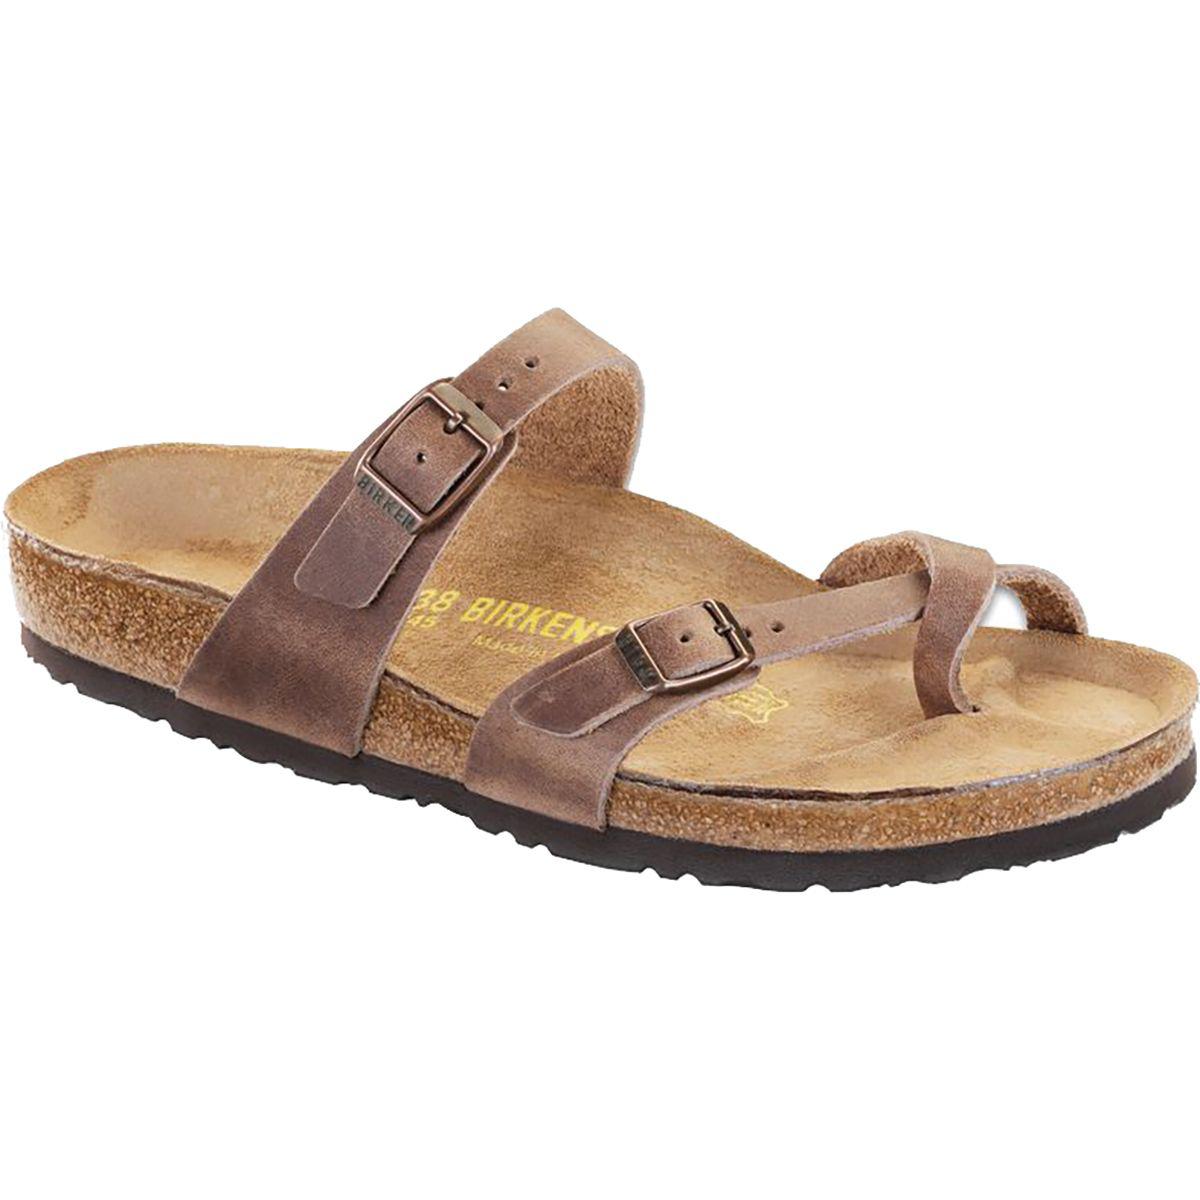 Birkenstock Leather Mayari Limited Edition Sandal in Brown - Lyst